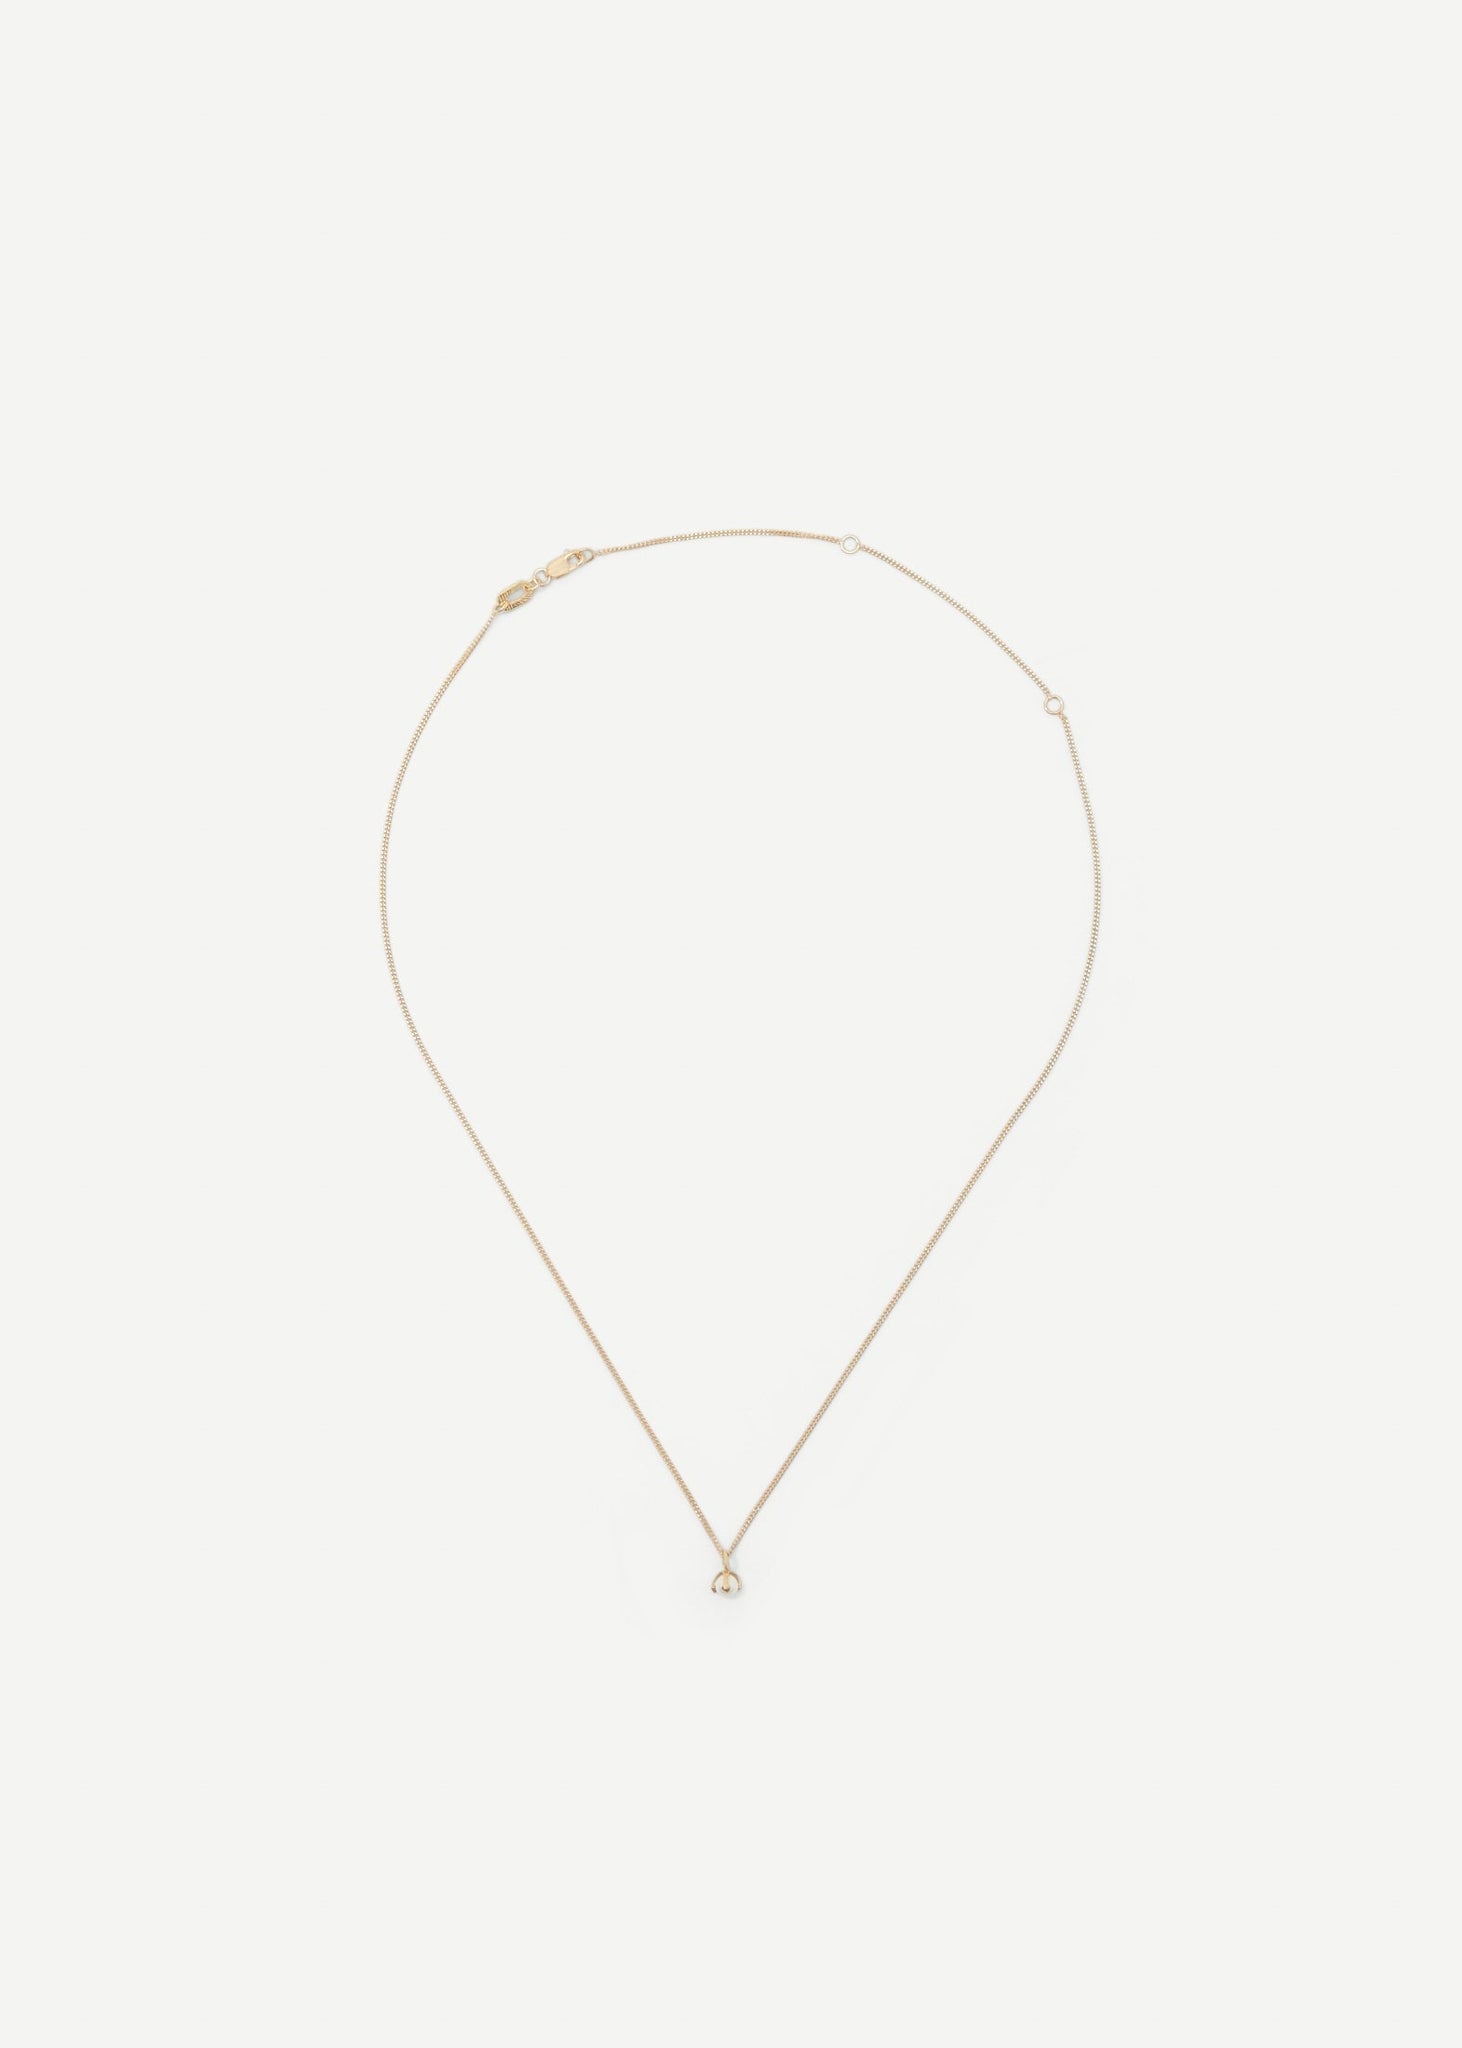 Pearled Necklace S - Cornelia Webb - 1